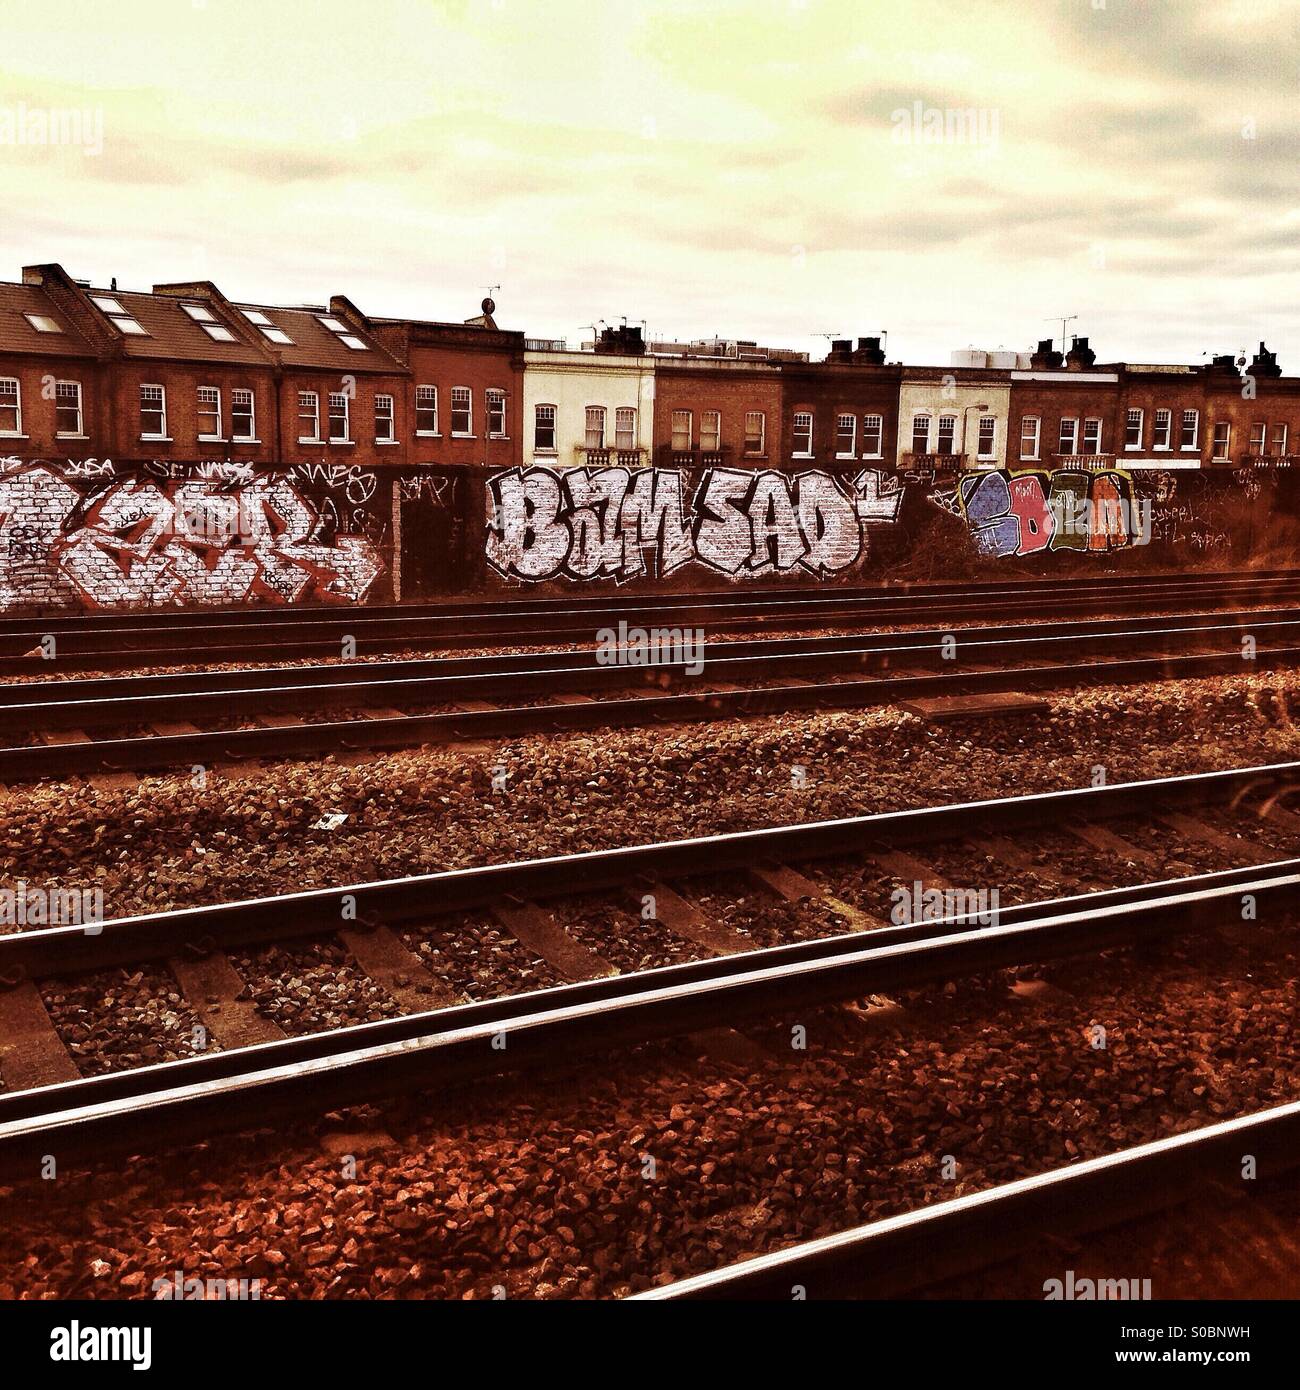 Railway tracks, buildings and trackside graffiti Stock Photo